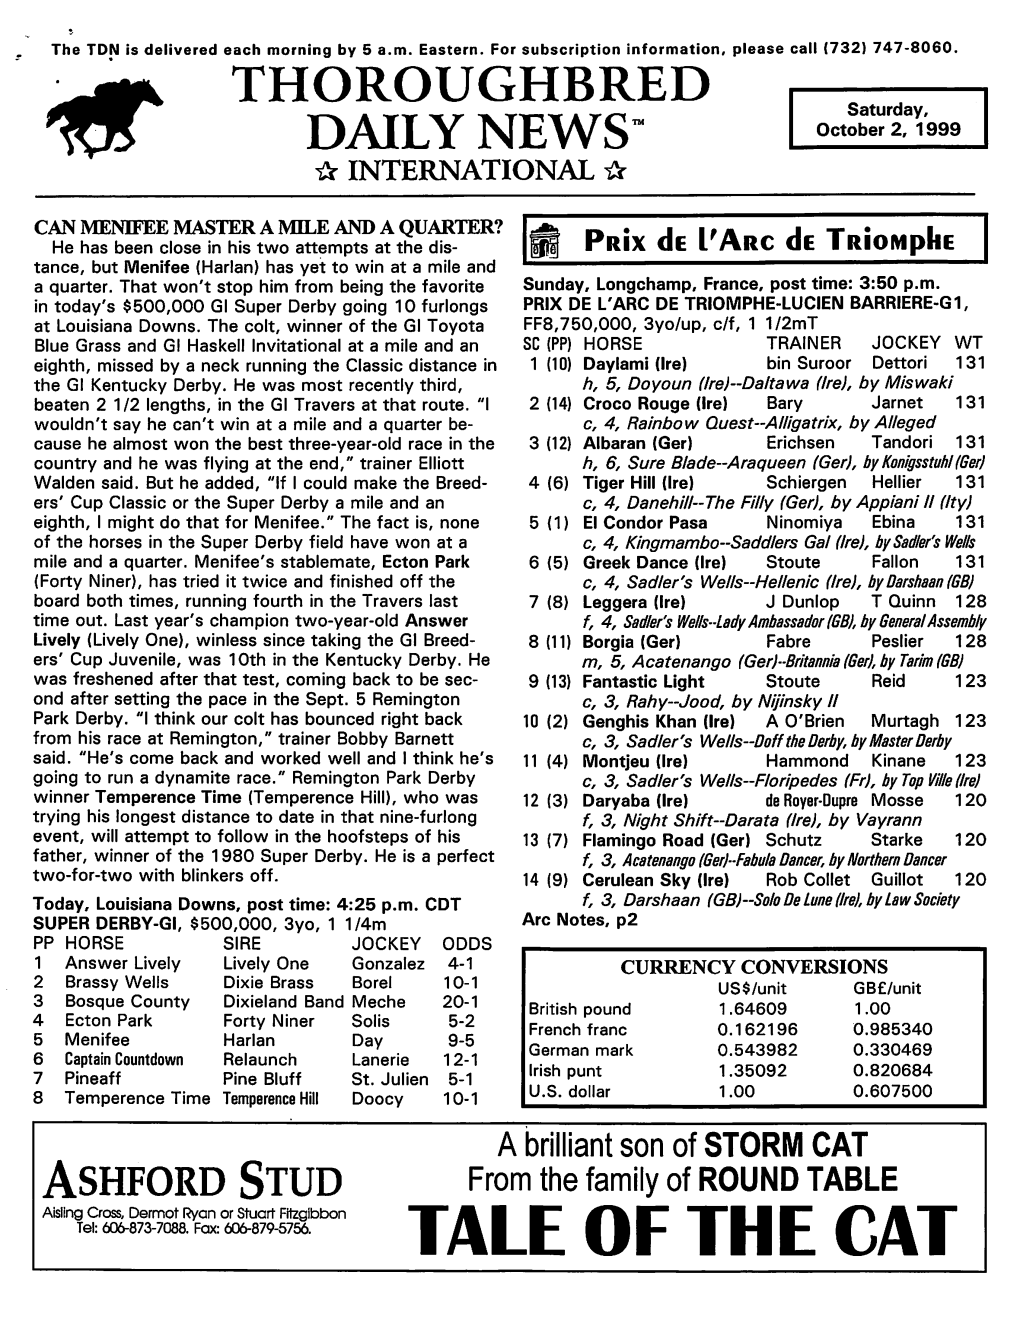 Lot DAILY NEWS" October 2, 1999 Ii INTERNATIONAL A